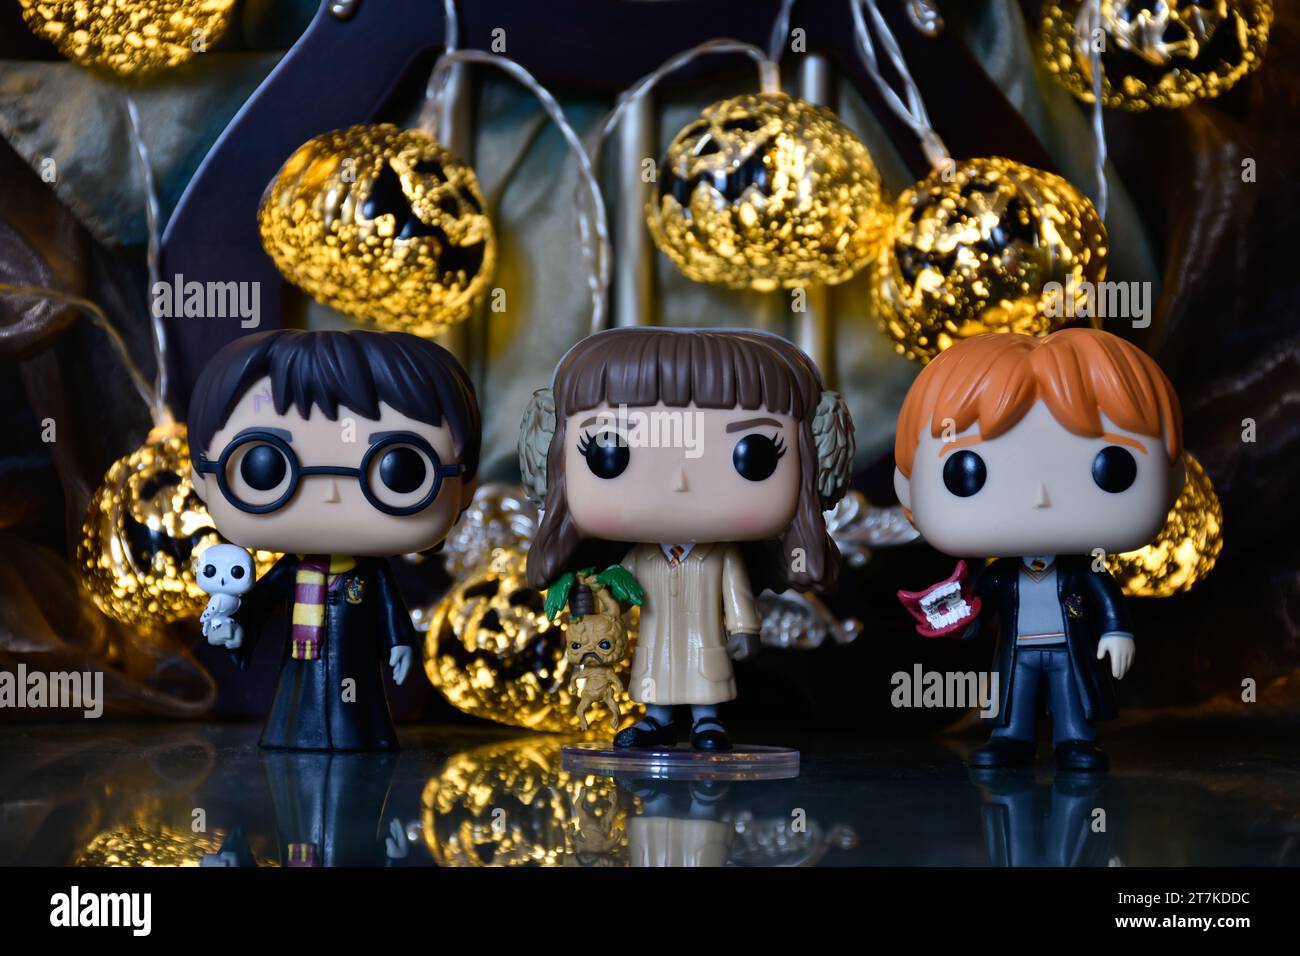 Funko Pop action figures of Harry Potter, Hermione Granger and Ron Weasley. Halloween pumpkin lights, dark palace, mysterious, magic, spooky season. Stock Photo